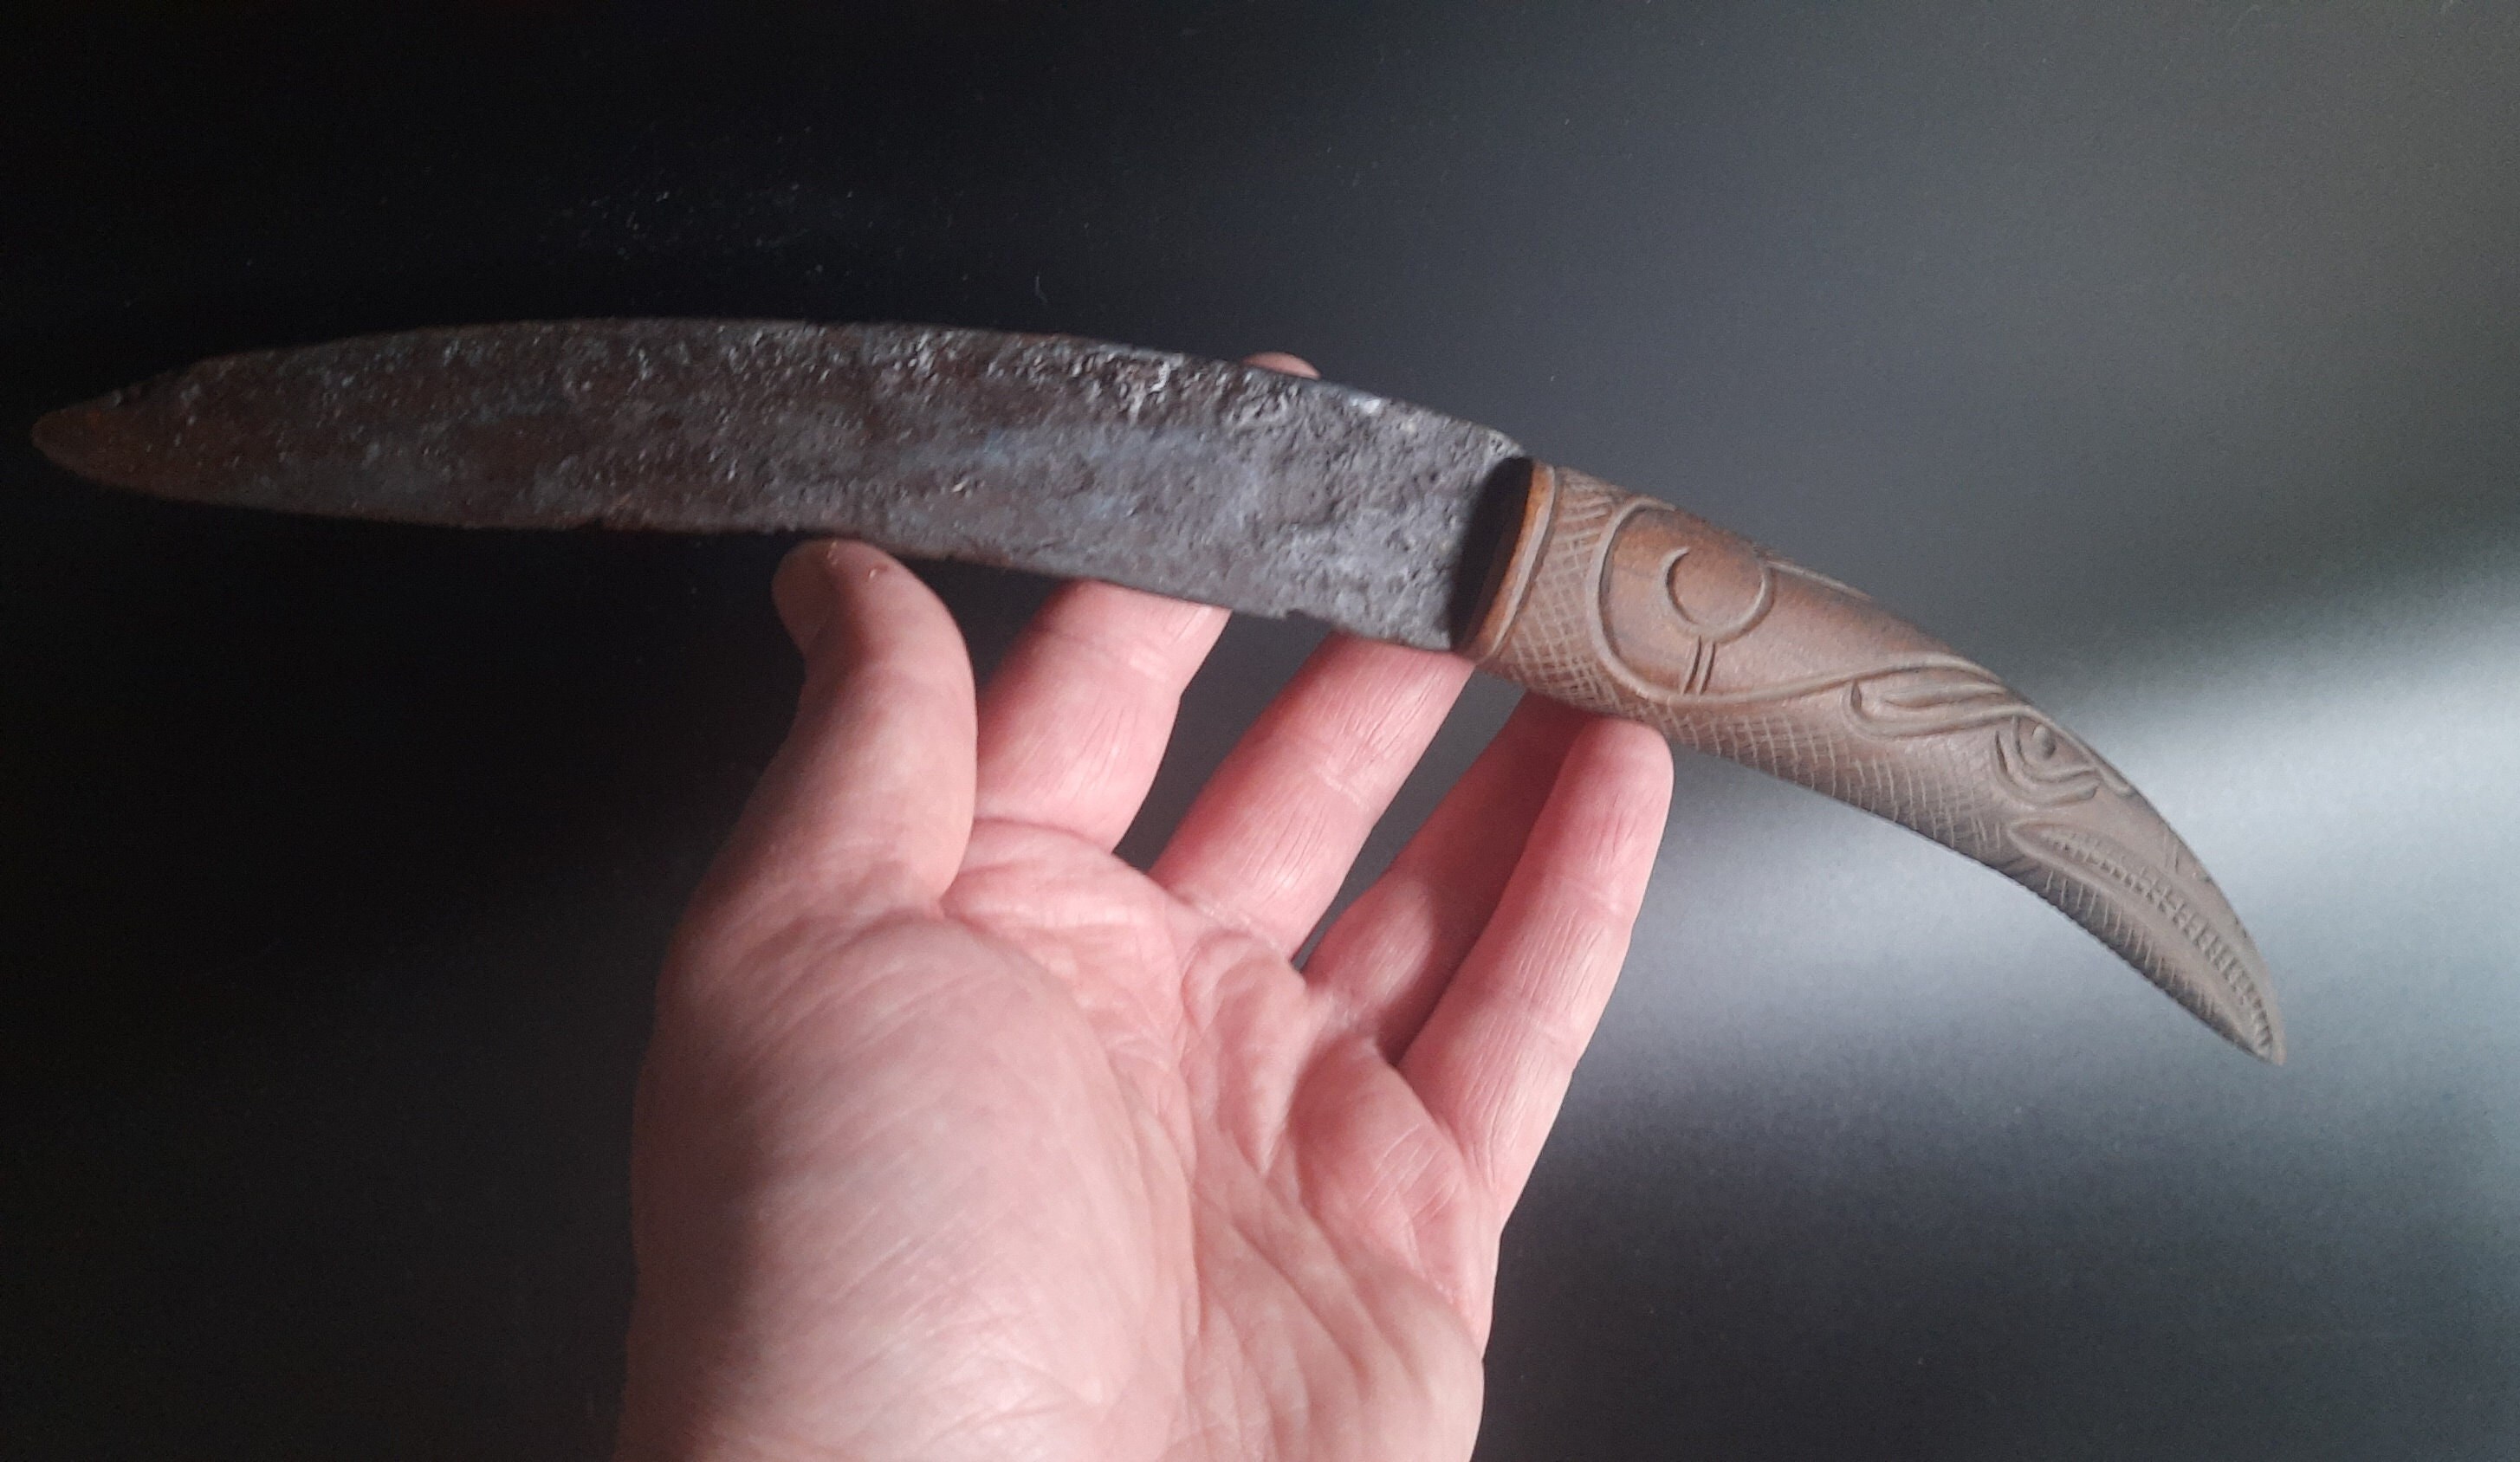 Raven Hilt Knife (Clearance Sale) - 5.5 Blade